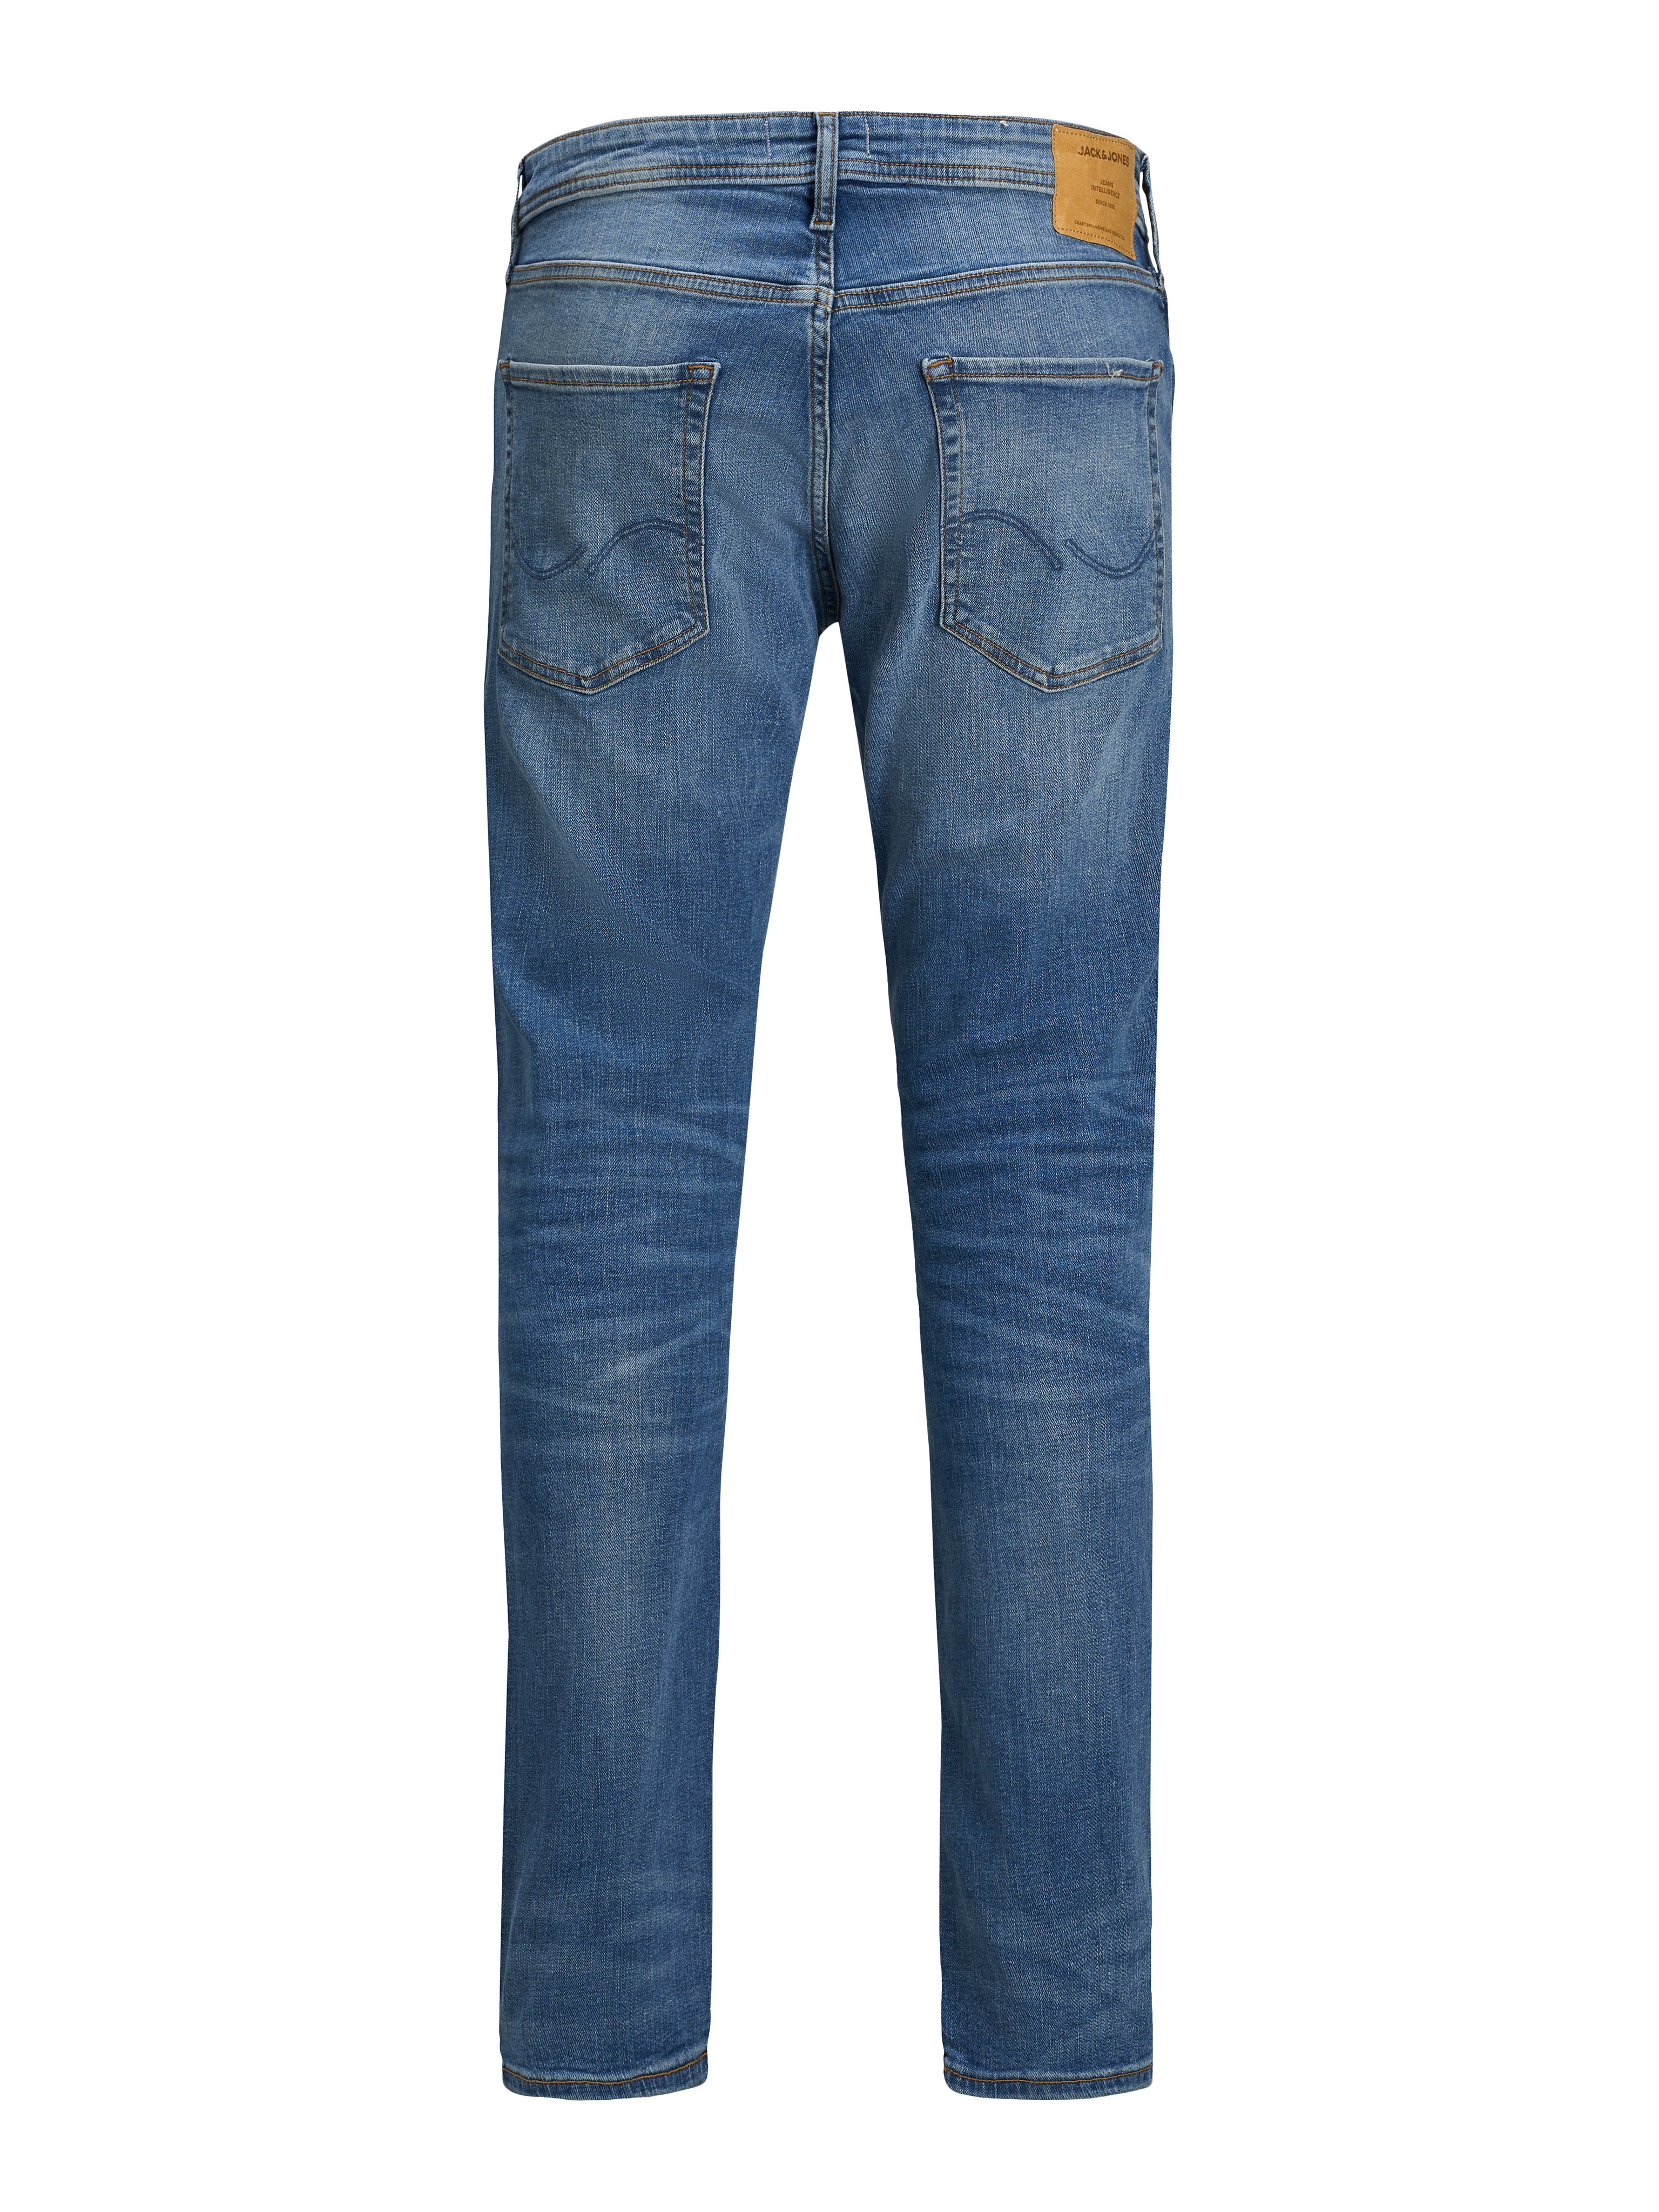 Jeans uomo Tim slim/straight fit, Denim, large image number 1